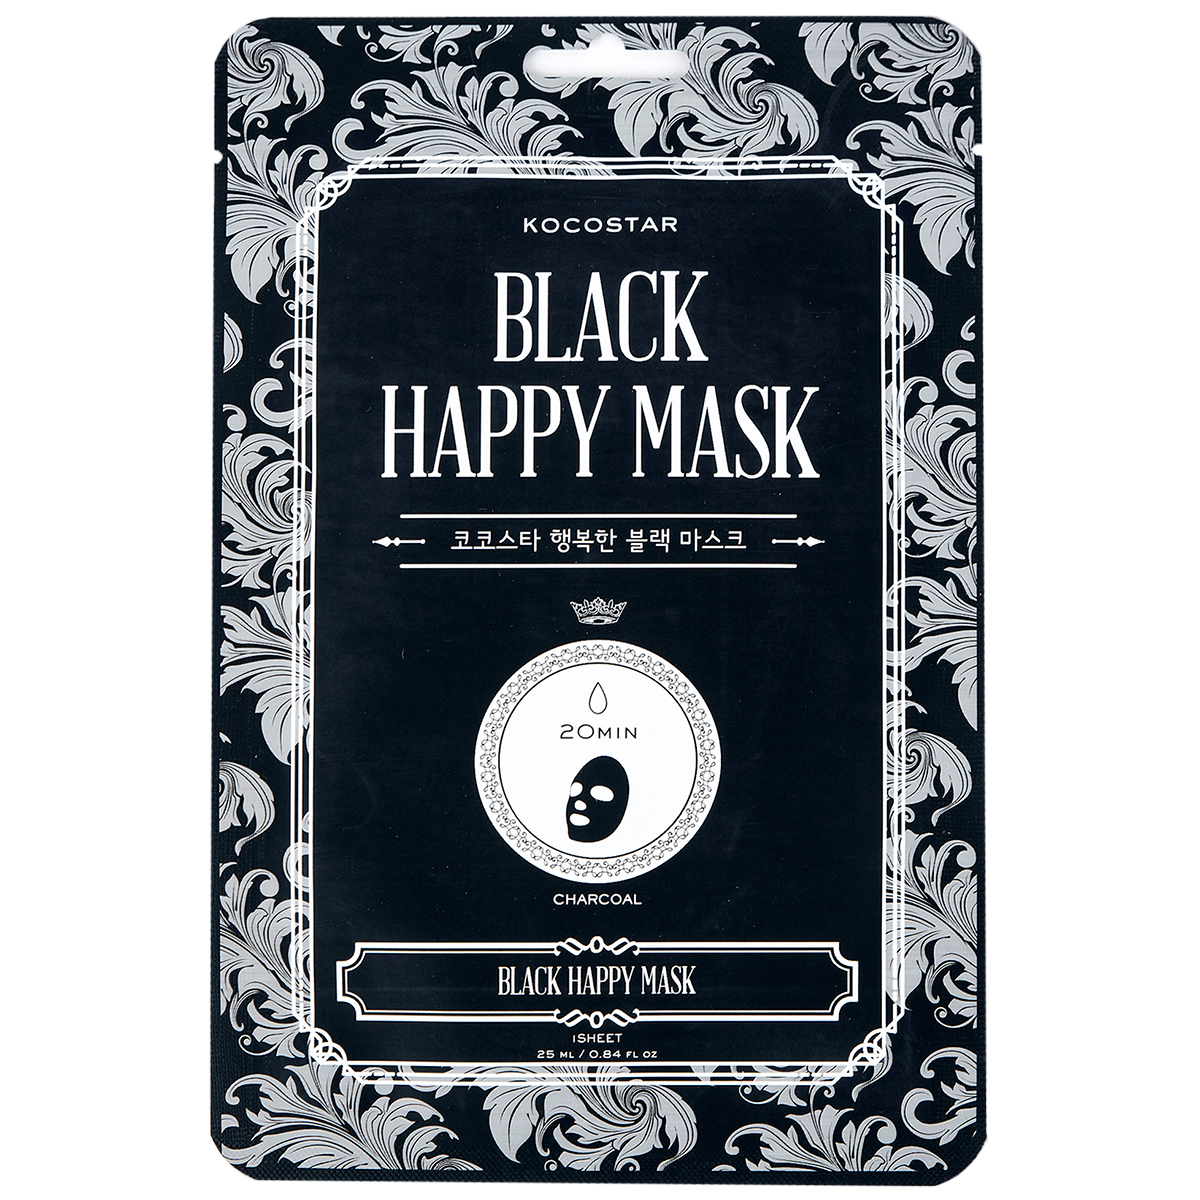 KOCOSTAR Black Happy Mask, 25 ml Kocostar K-Beauty